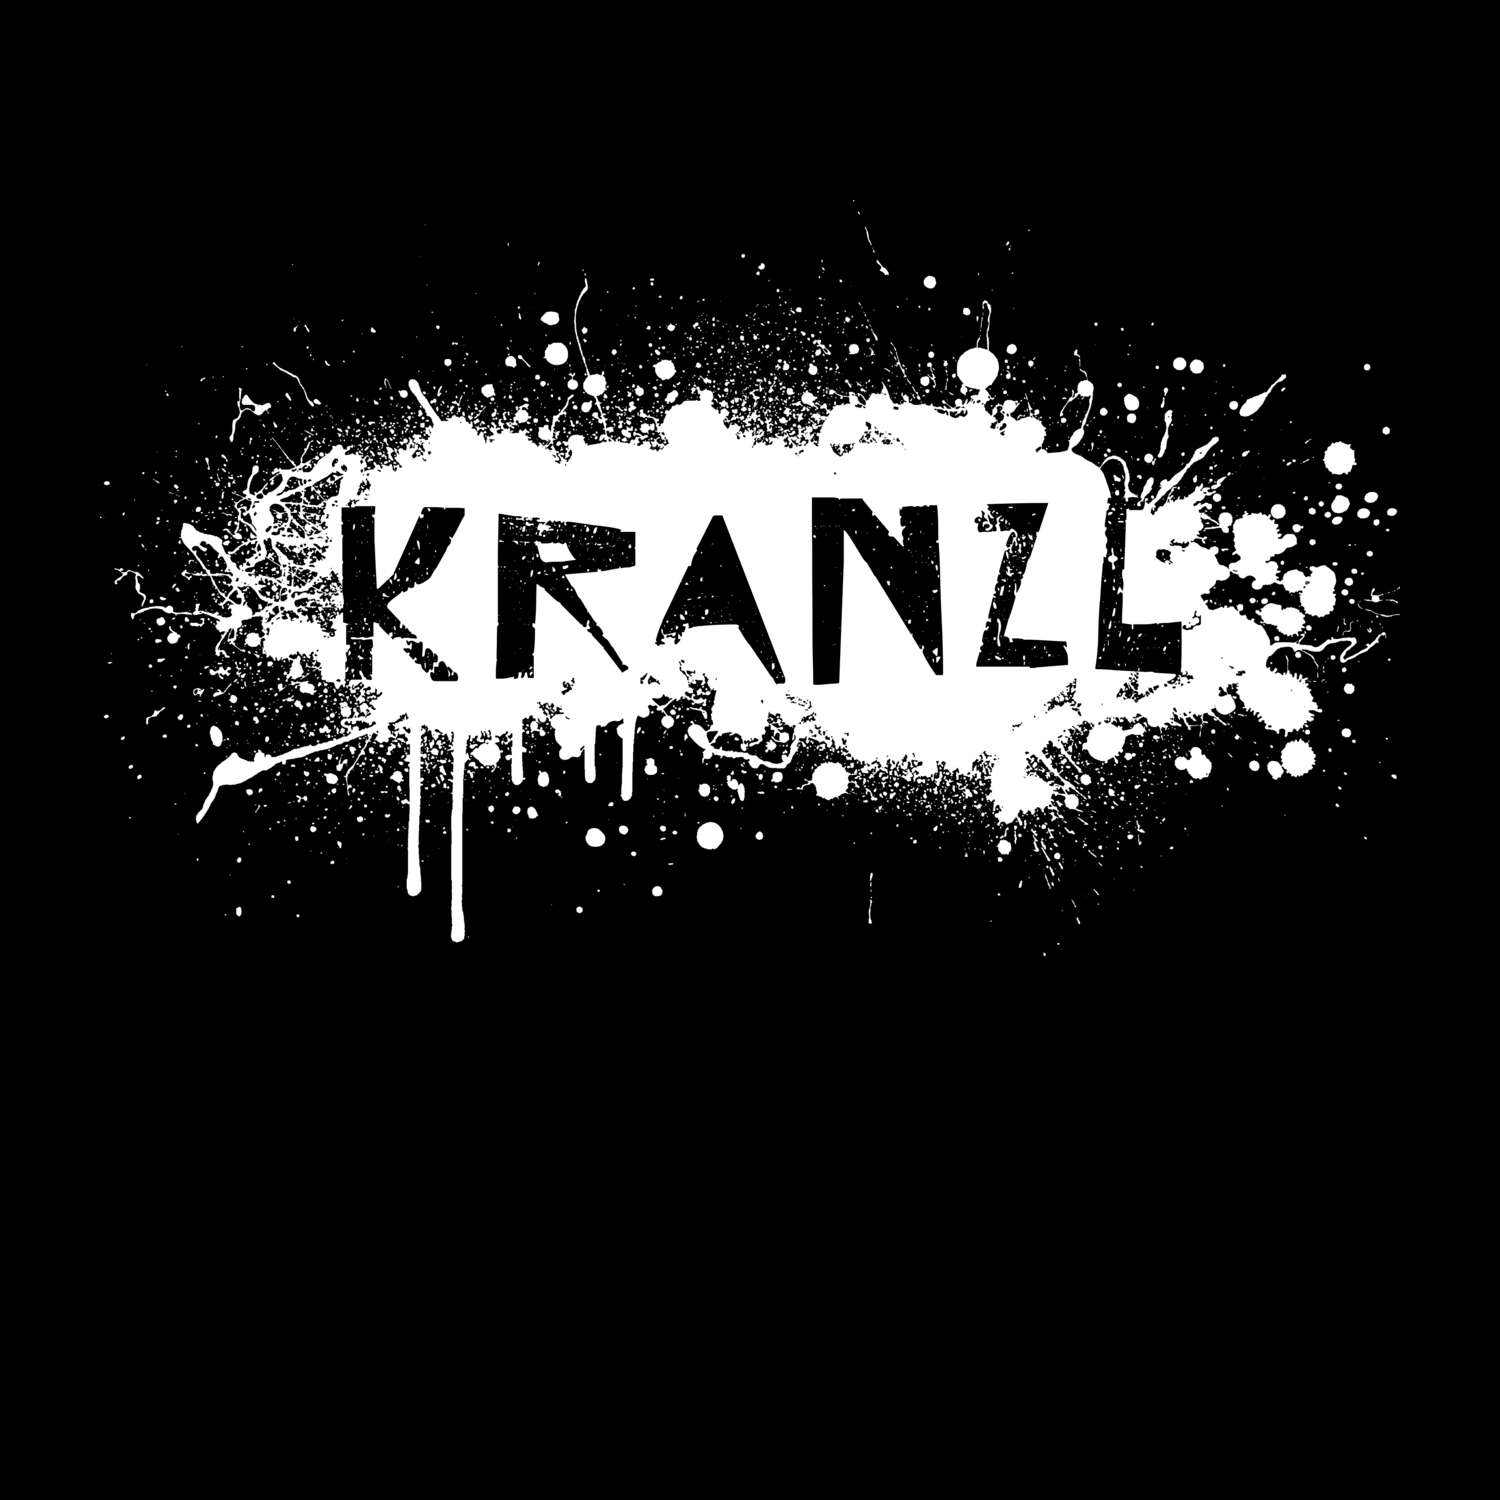 Kranzl T-Shirt »Paint Splash Punk«